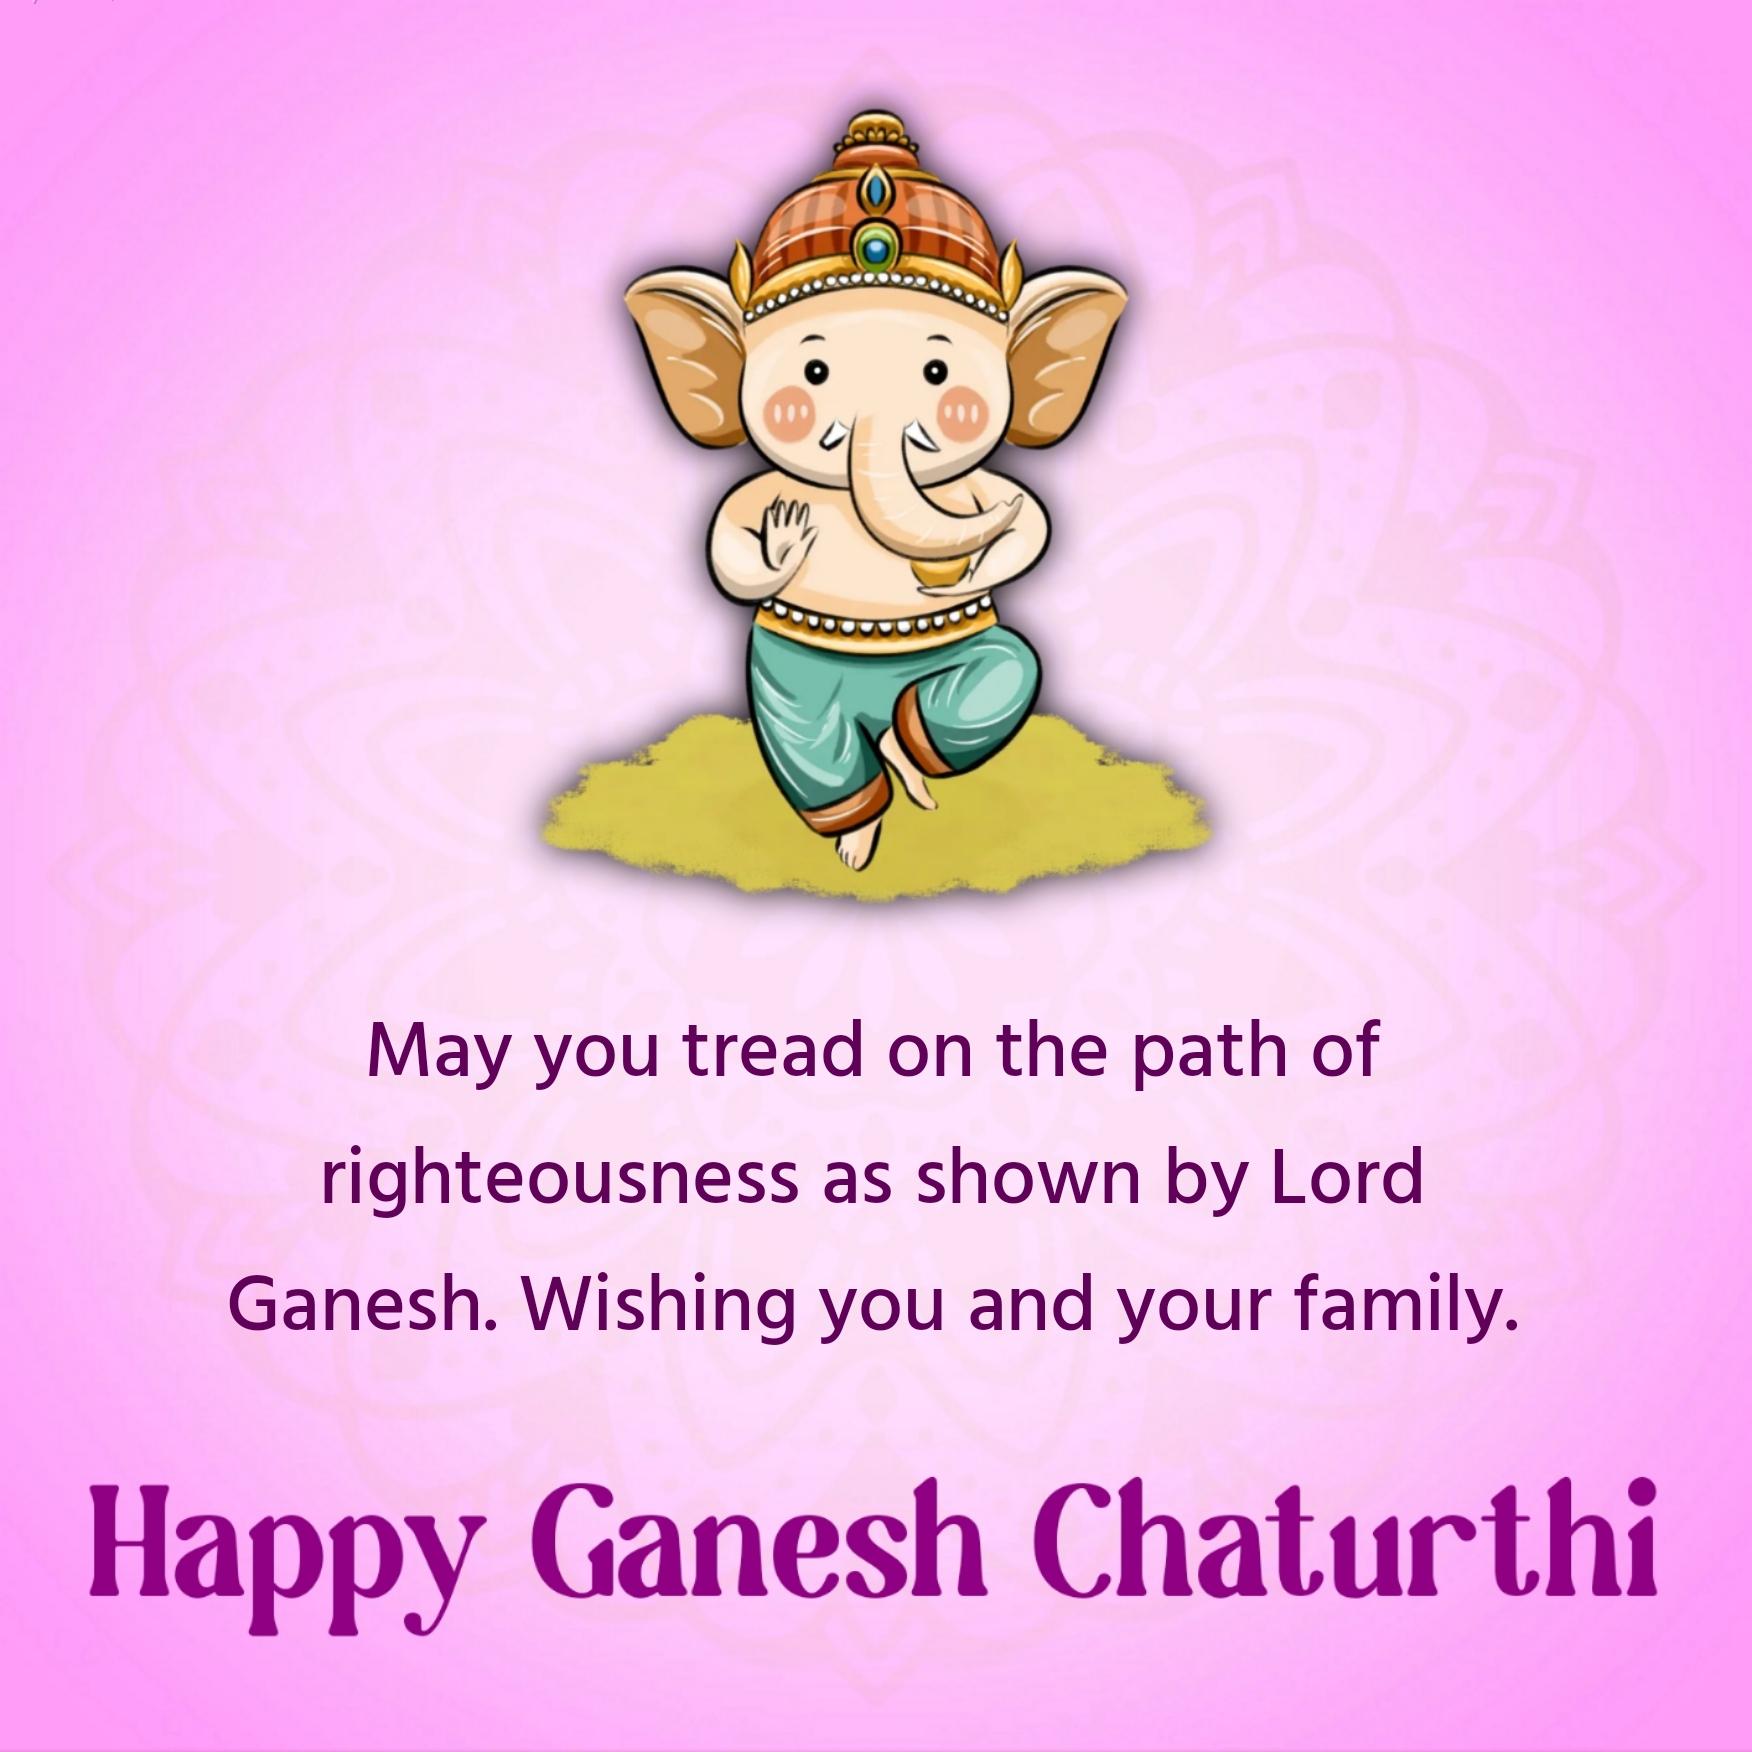 Happy Ganesh Chaturthi Wishes in English